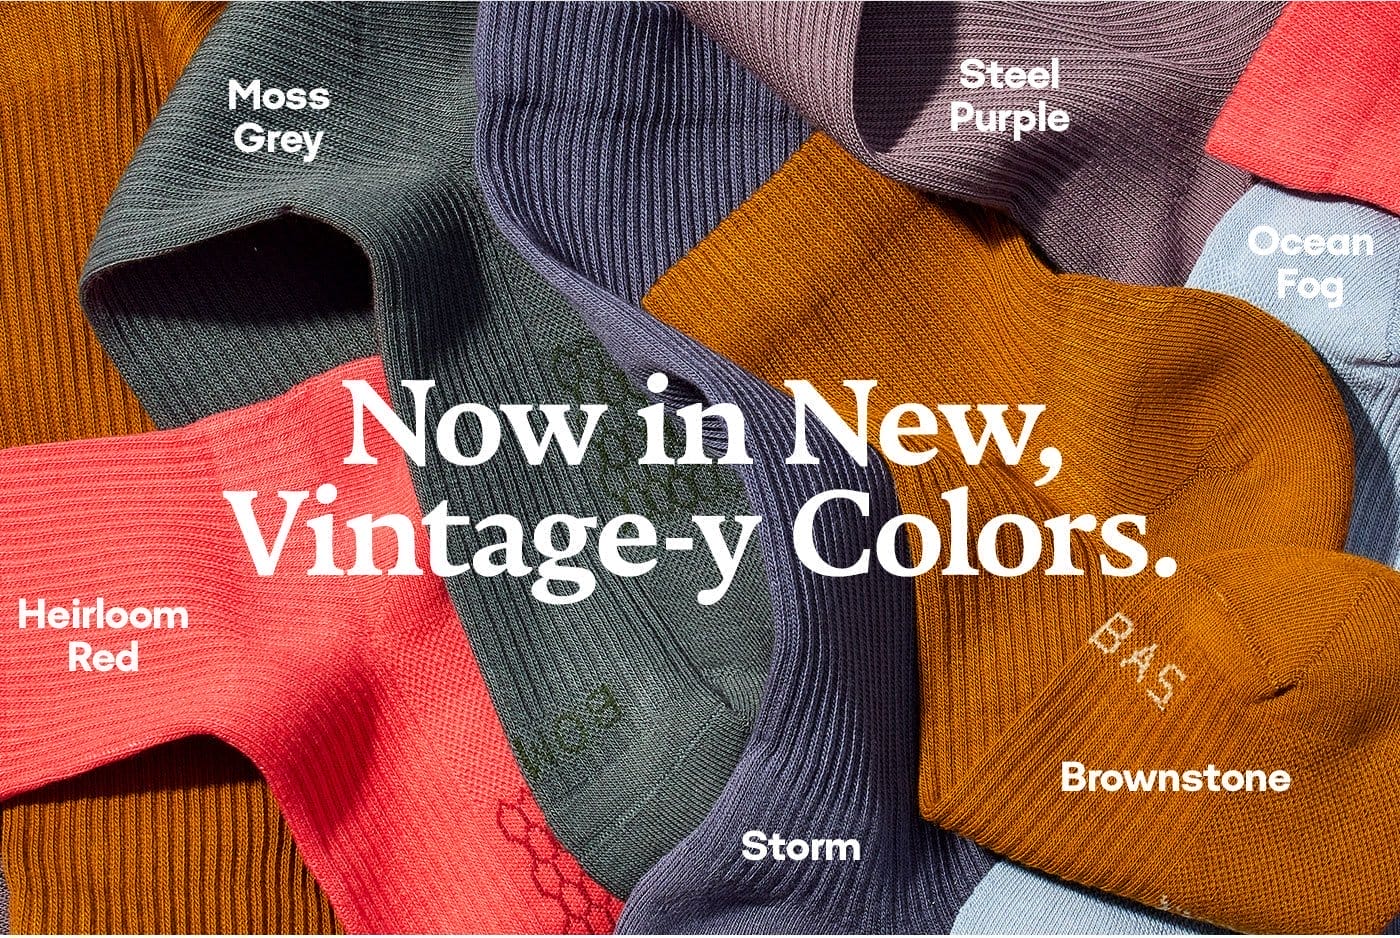 Now in New, Vintage-y Colors.